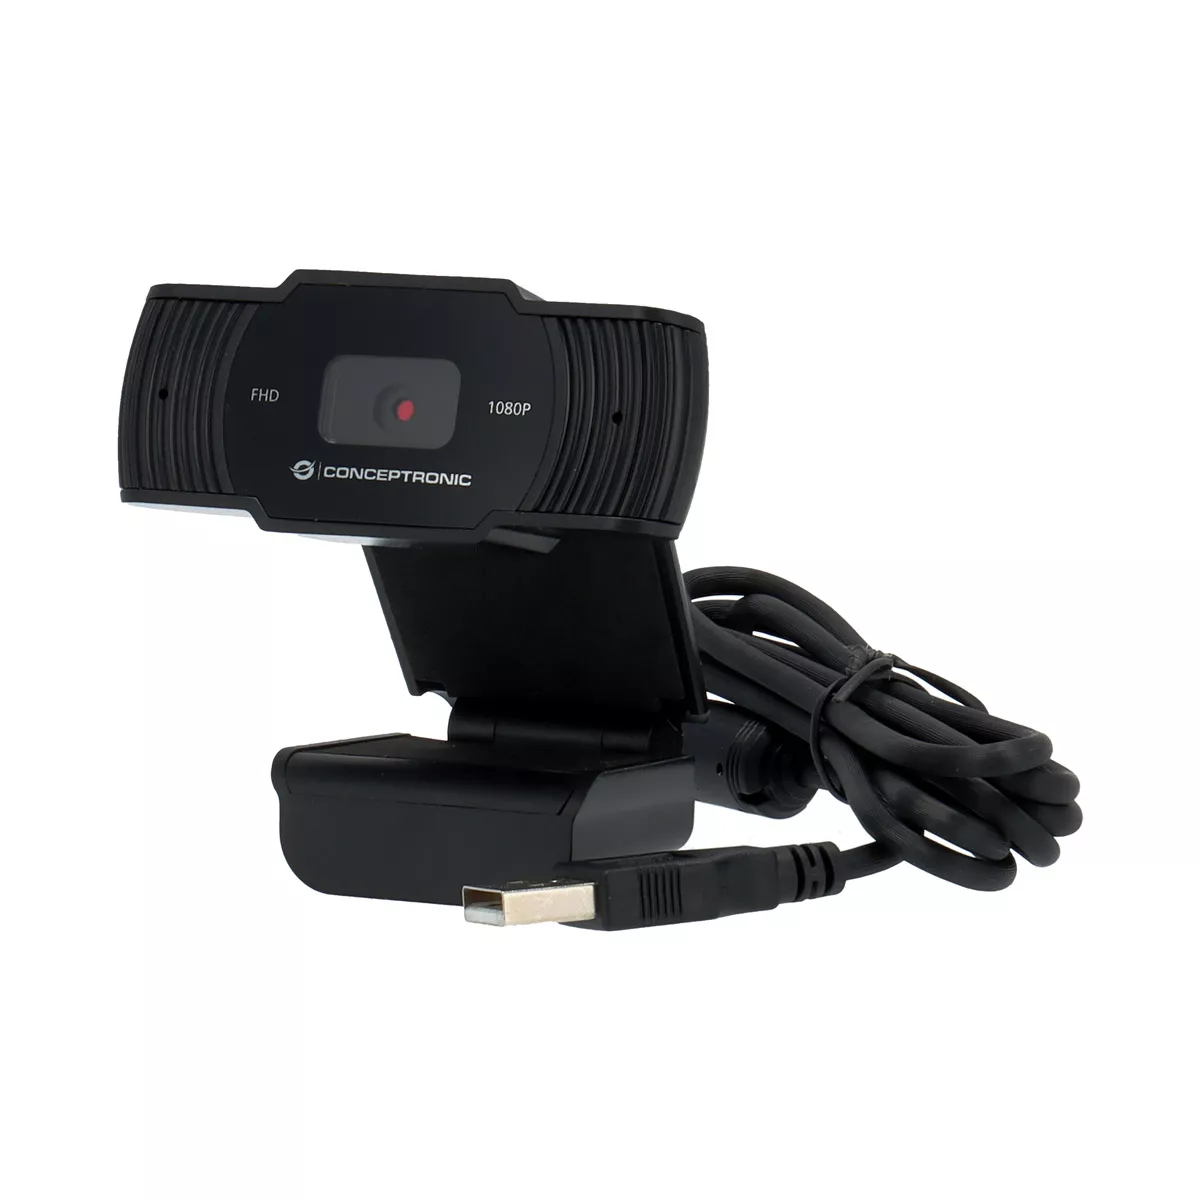 Conceptronic AMDIS 1080p Full-HD USB Webcam